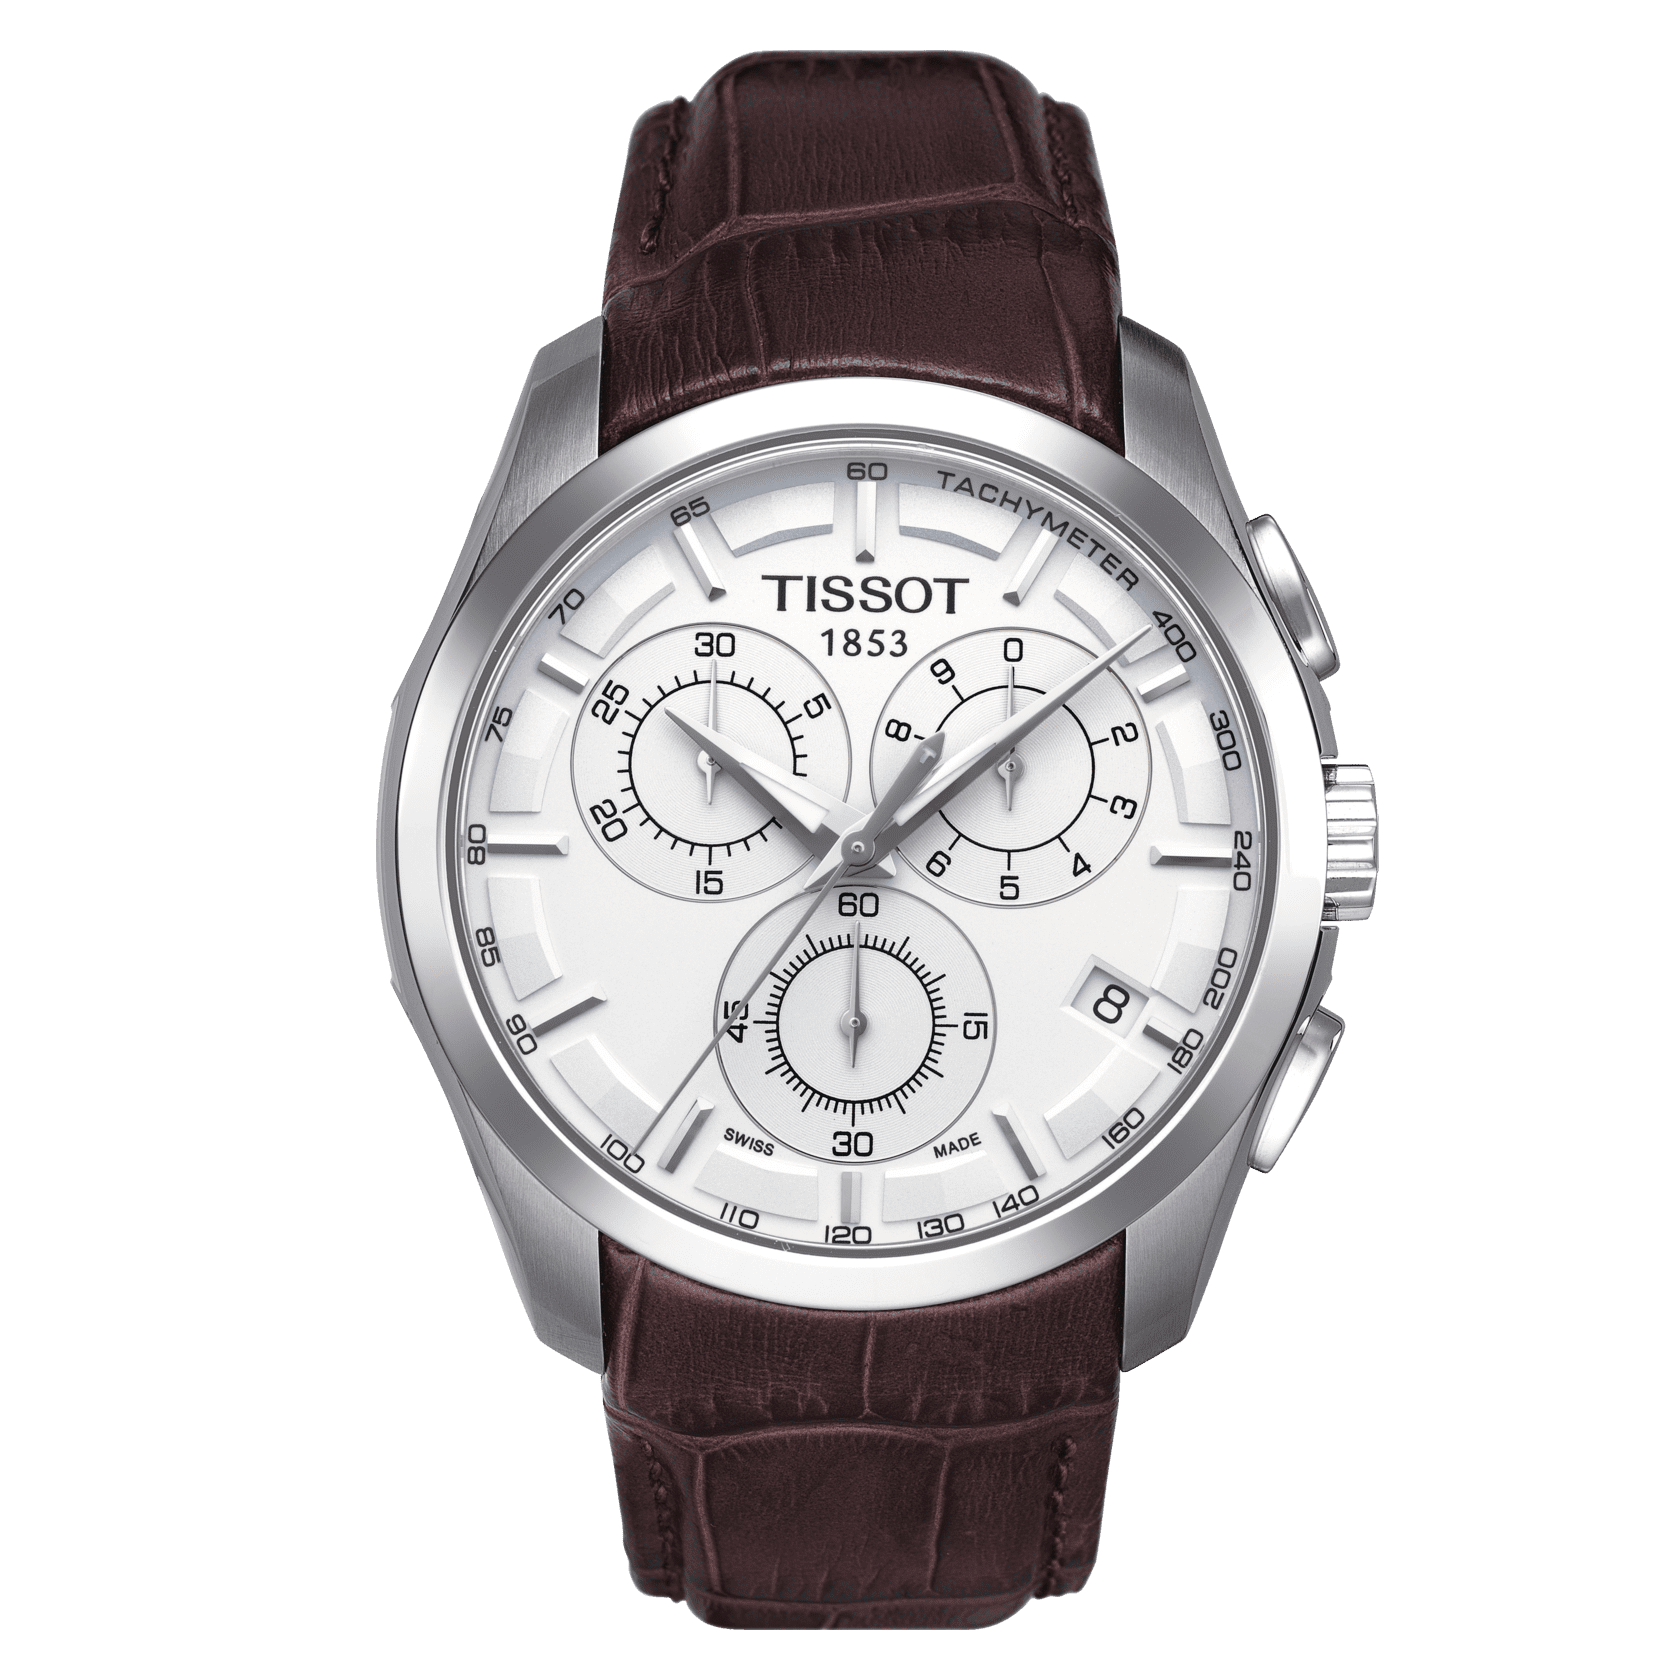 Luxury Swiss Replica Watches Aaa+ Grade